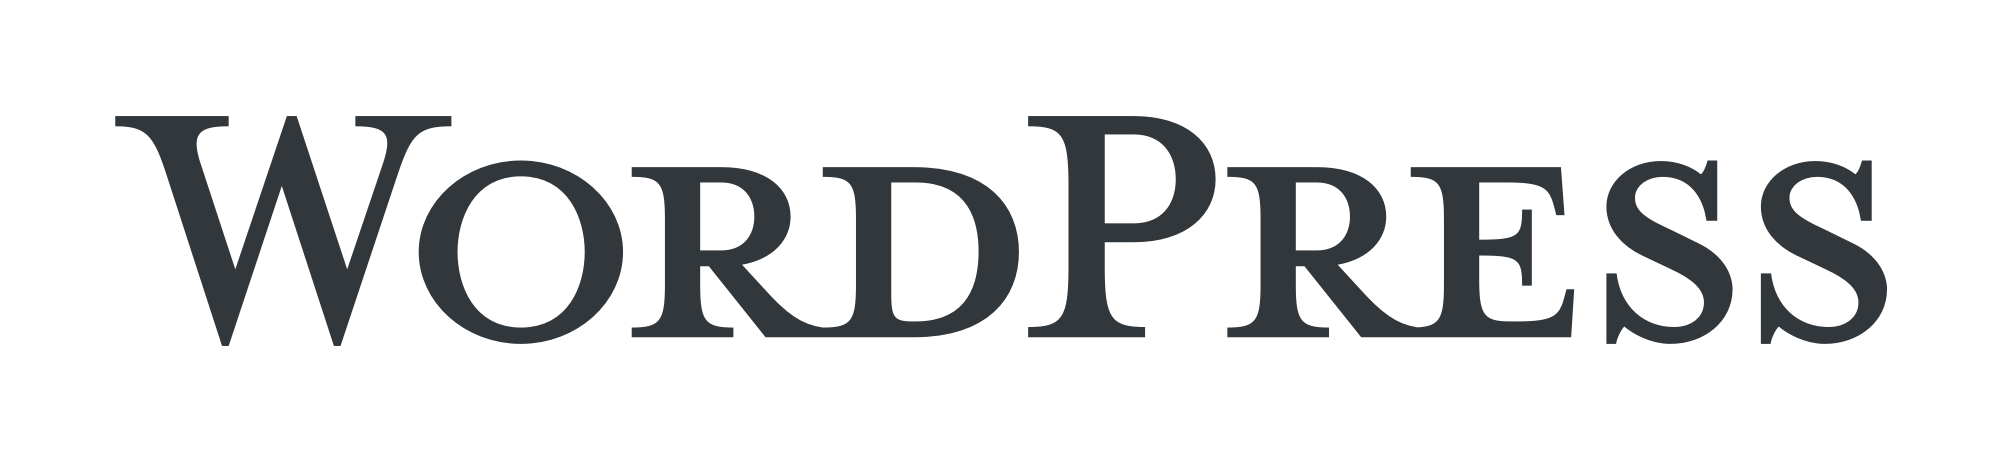 wordpress logo